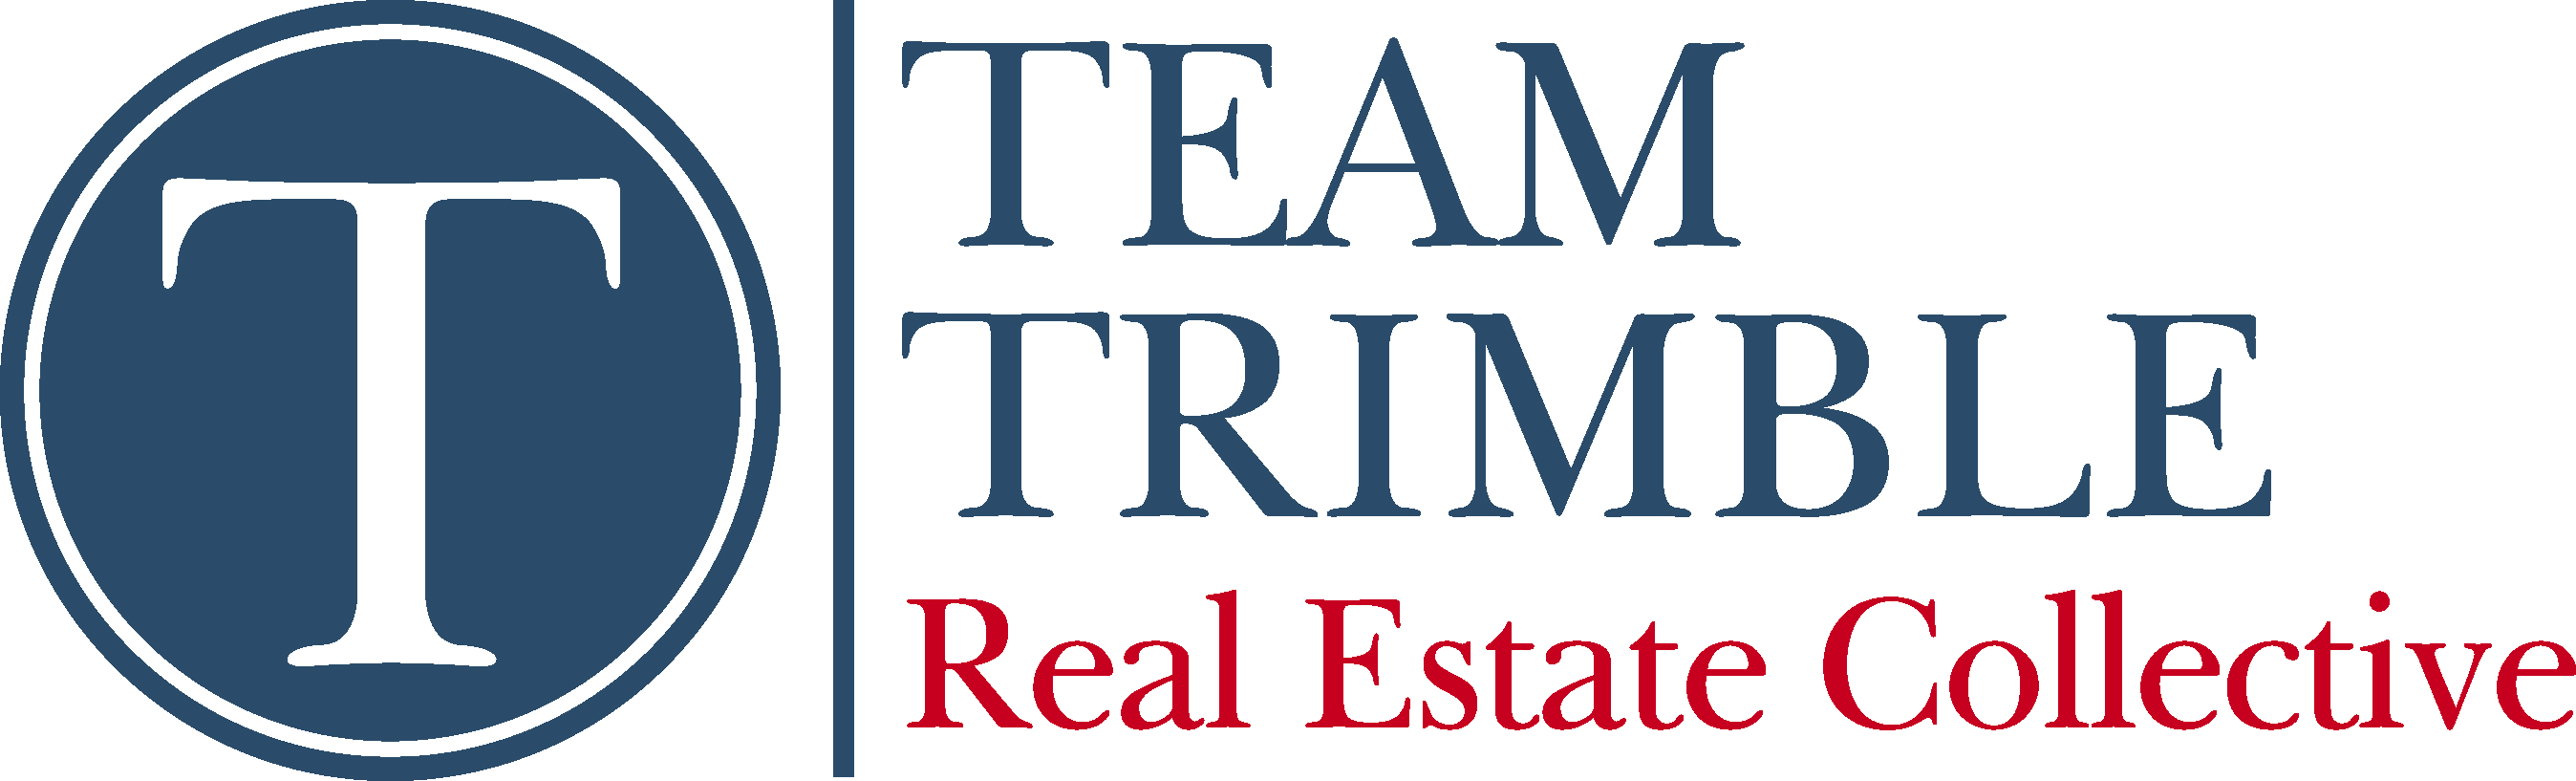 Team Trimble Real Estate Collective